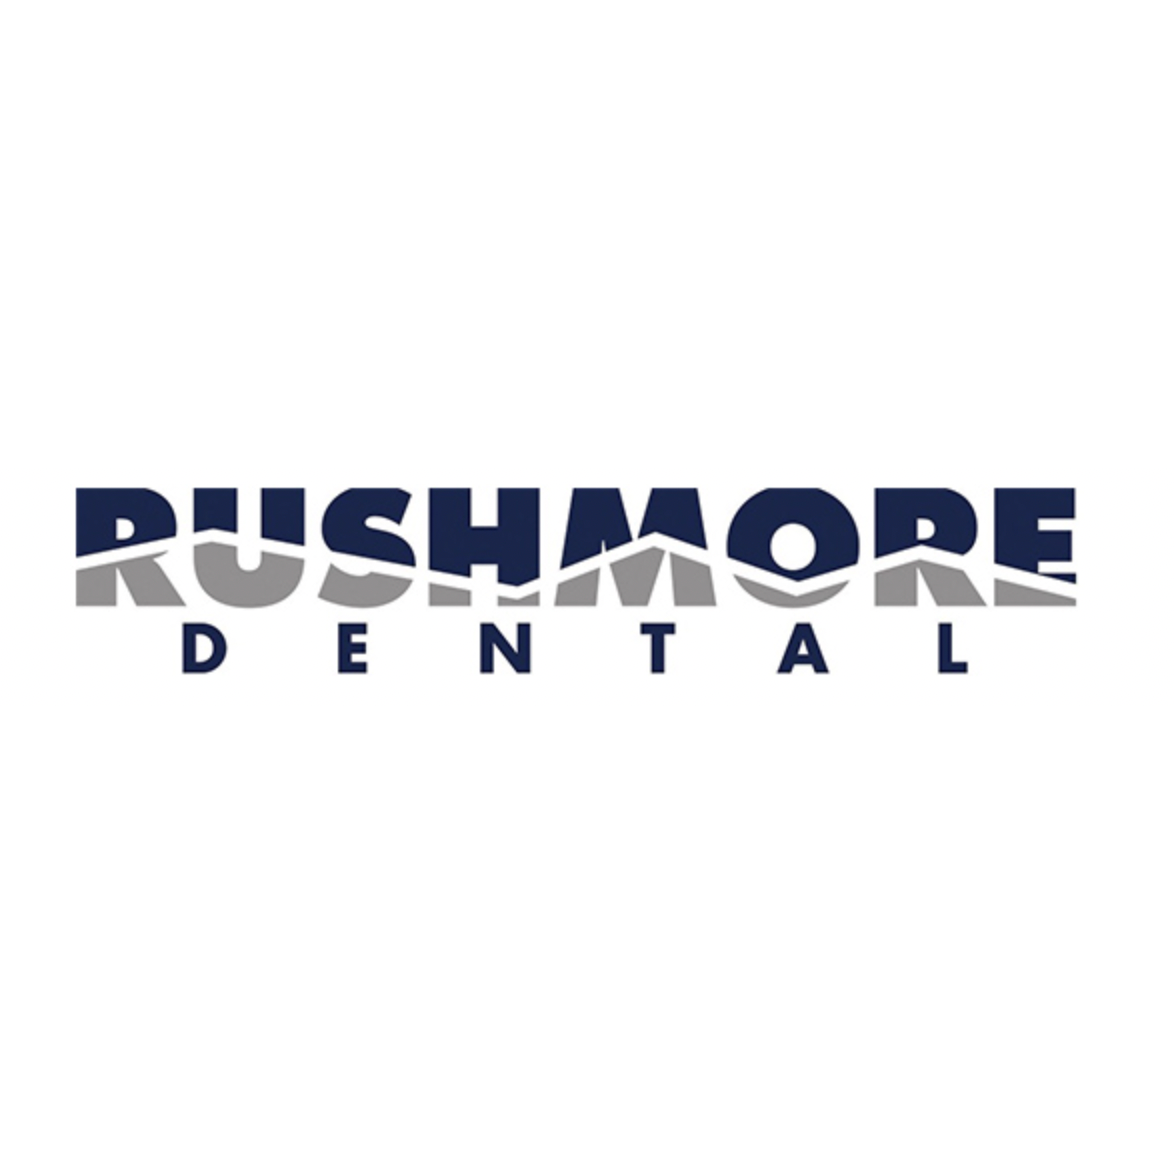 Rushmore Dental of Rapid City - Tim Kelly DDS